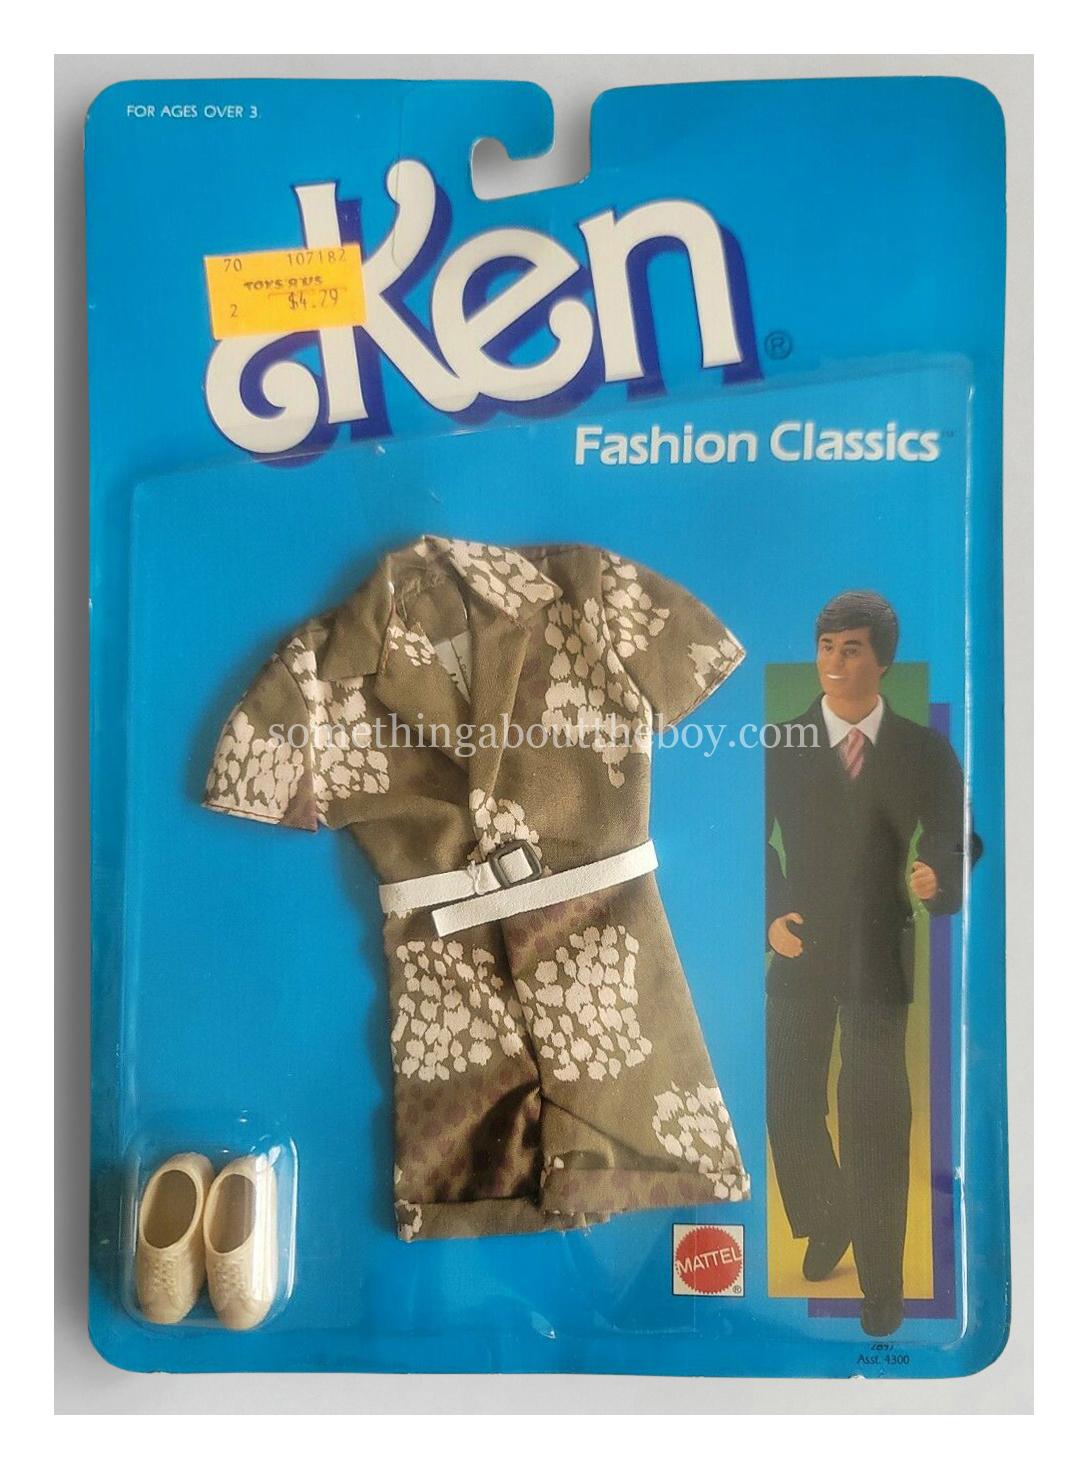 1986 #2897 Fashion Classics in original packaging